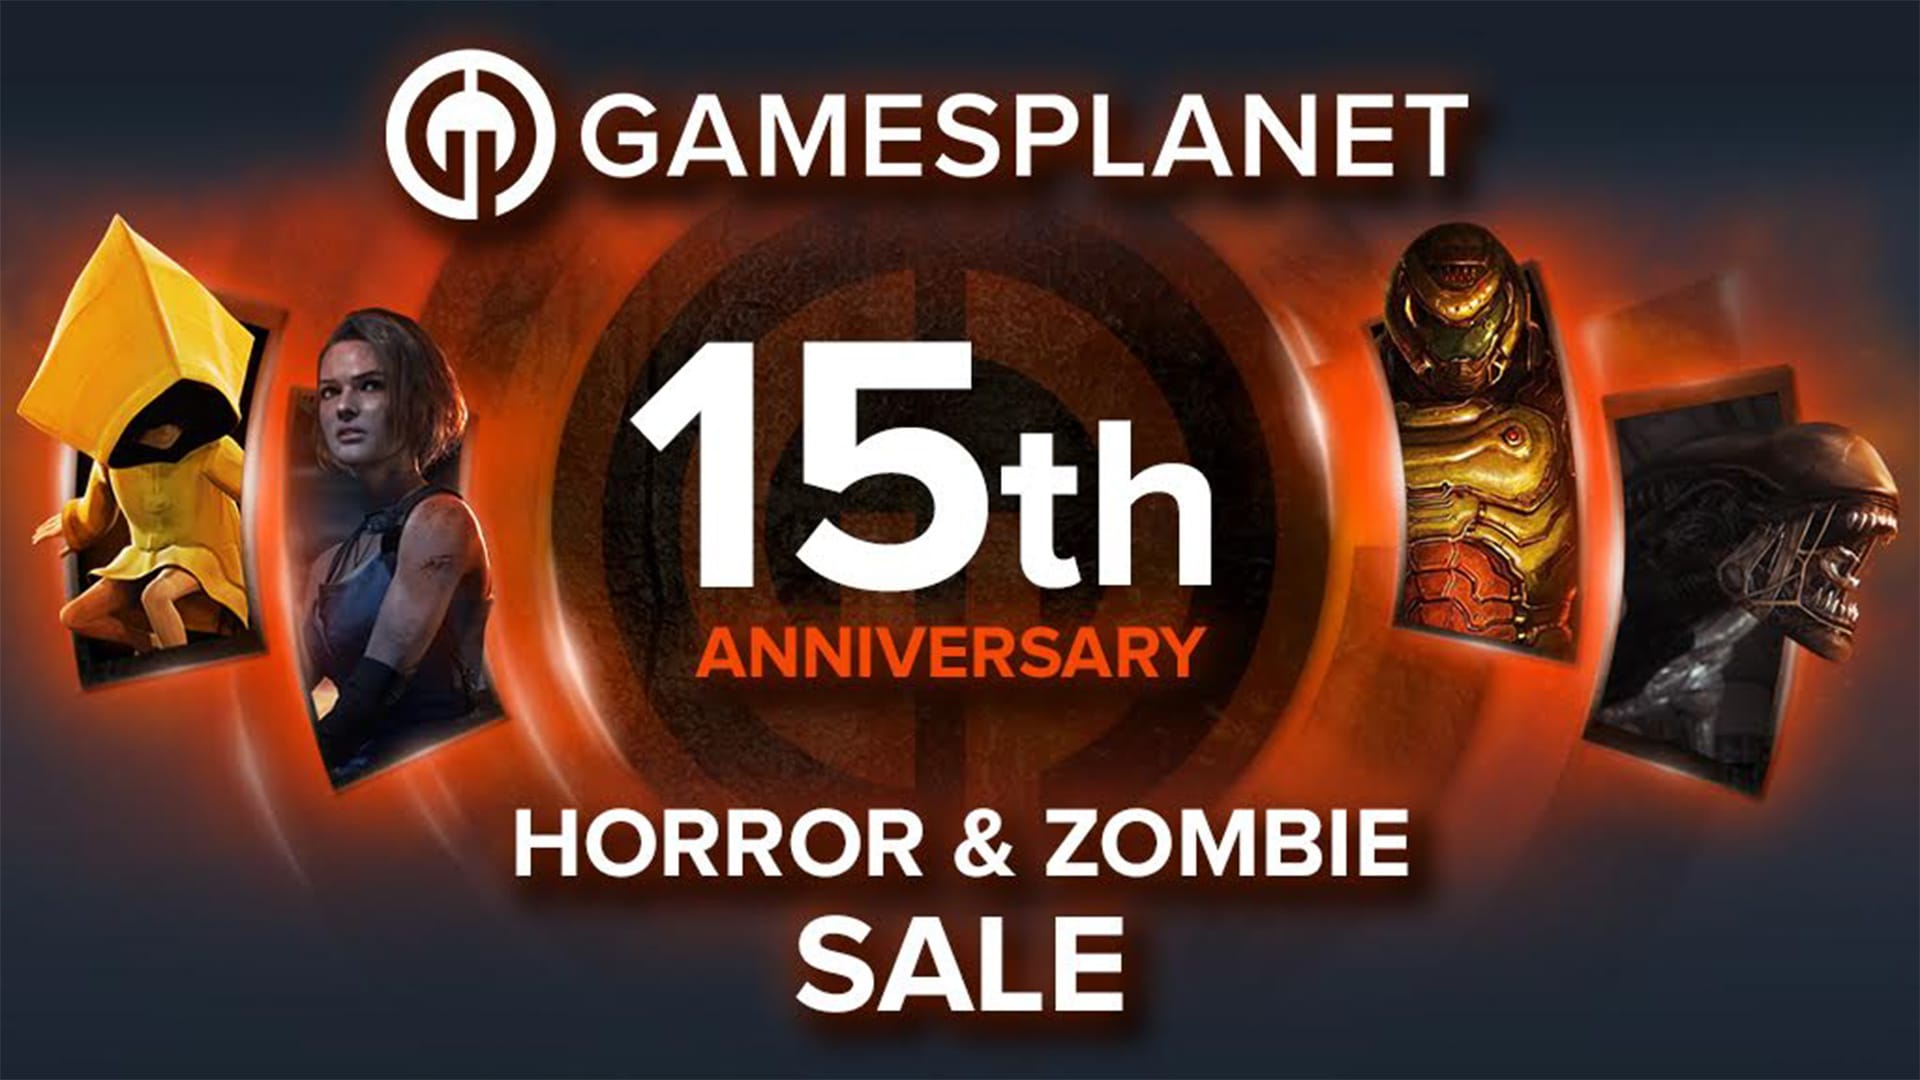 Gamesplanet 15th Anniversary Sale Key Art